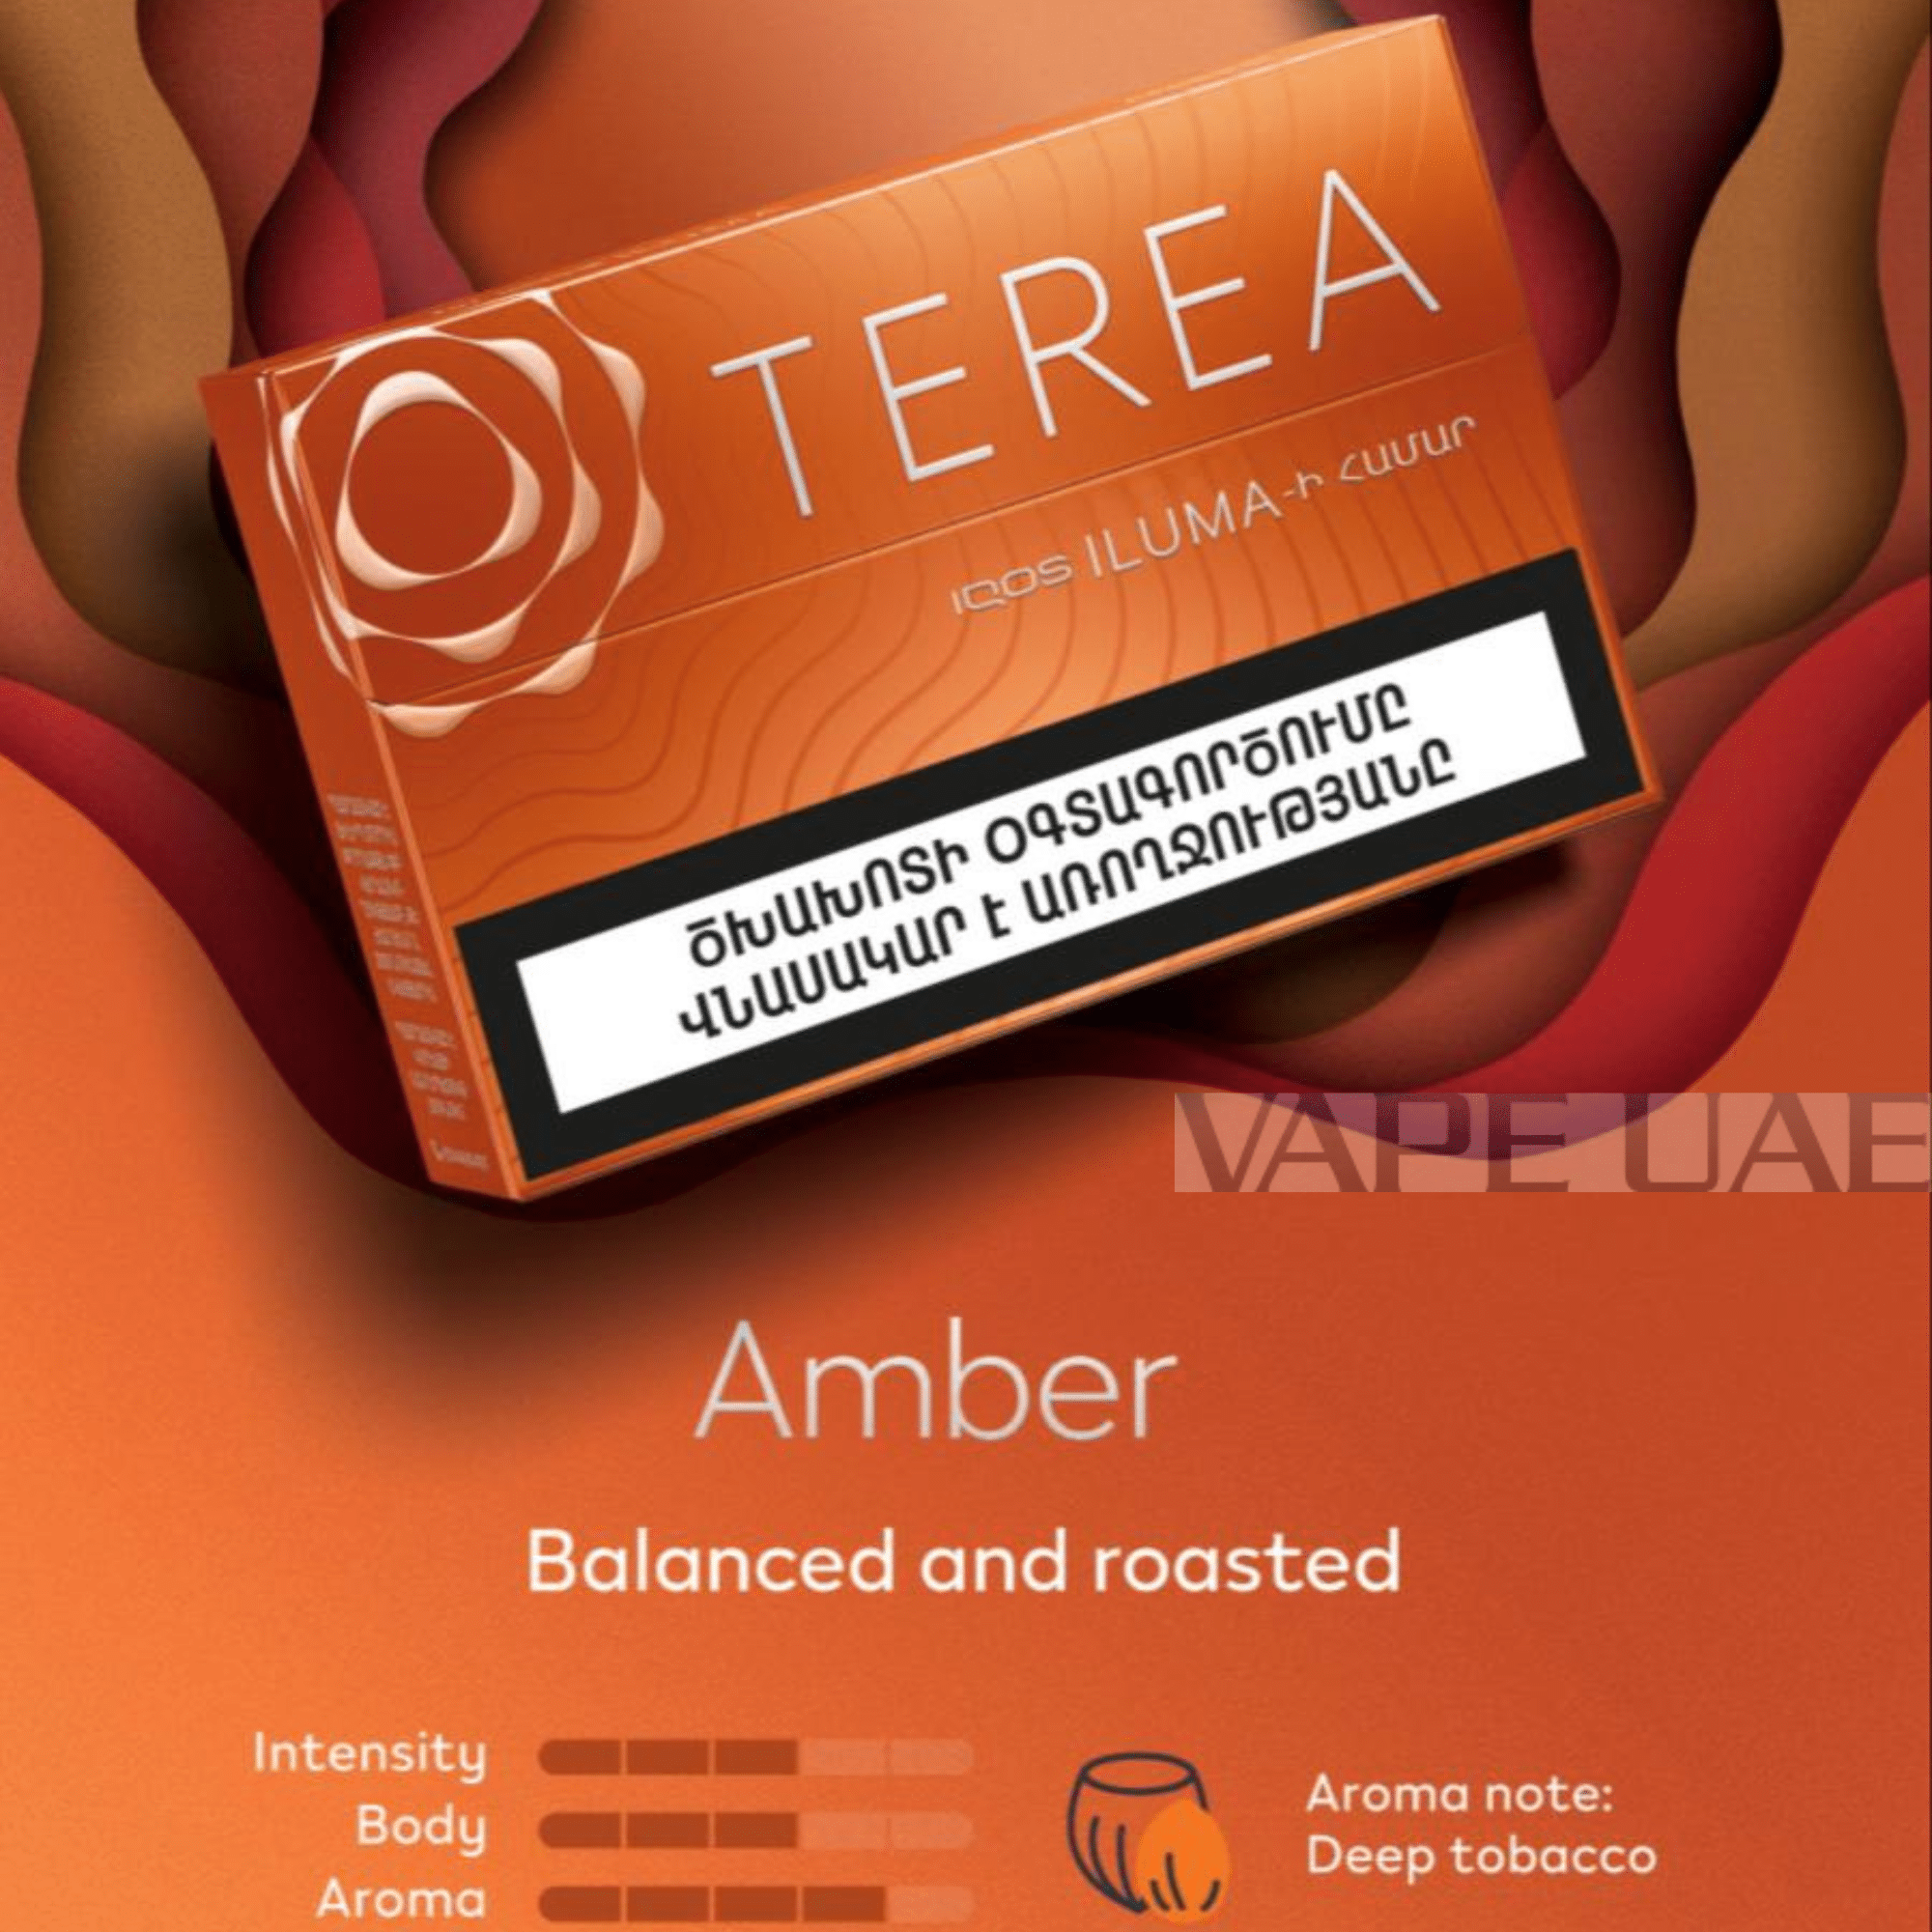 Terea - Amber